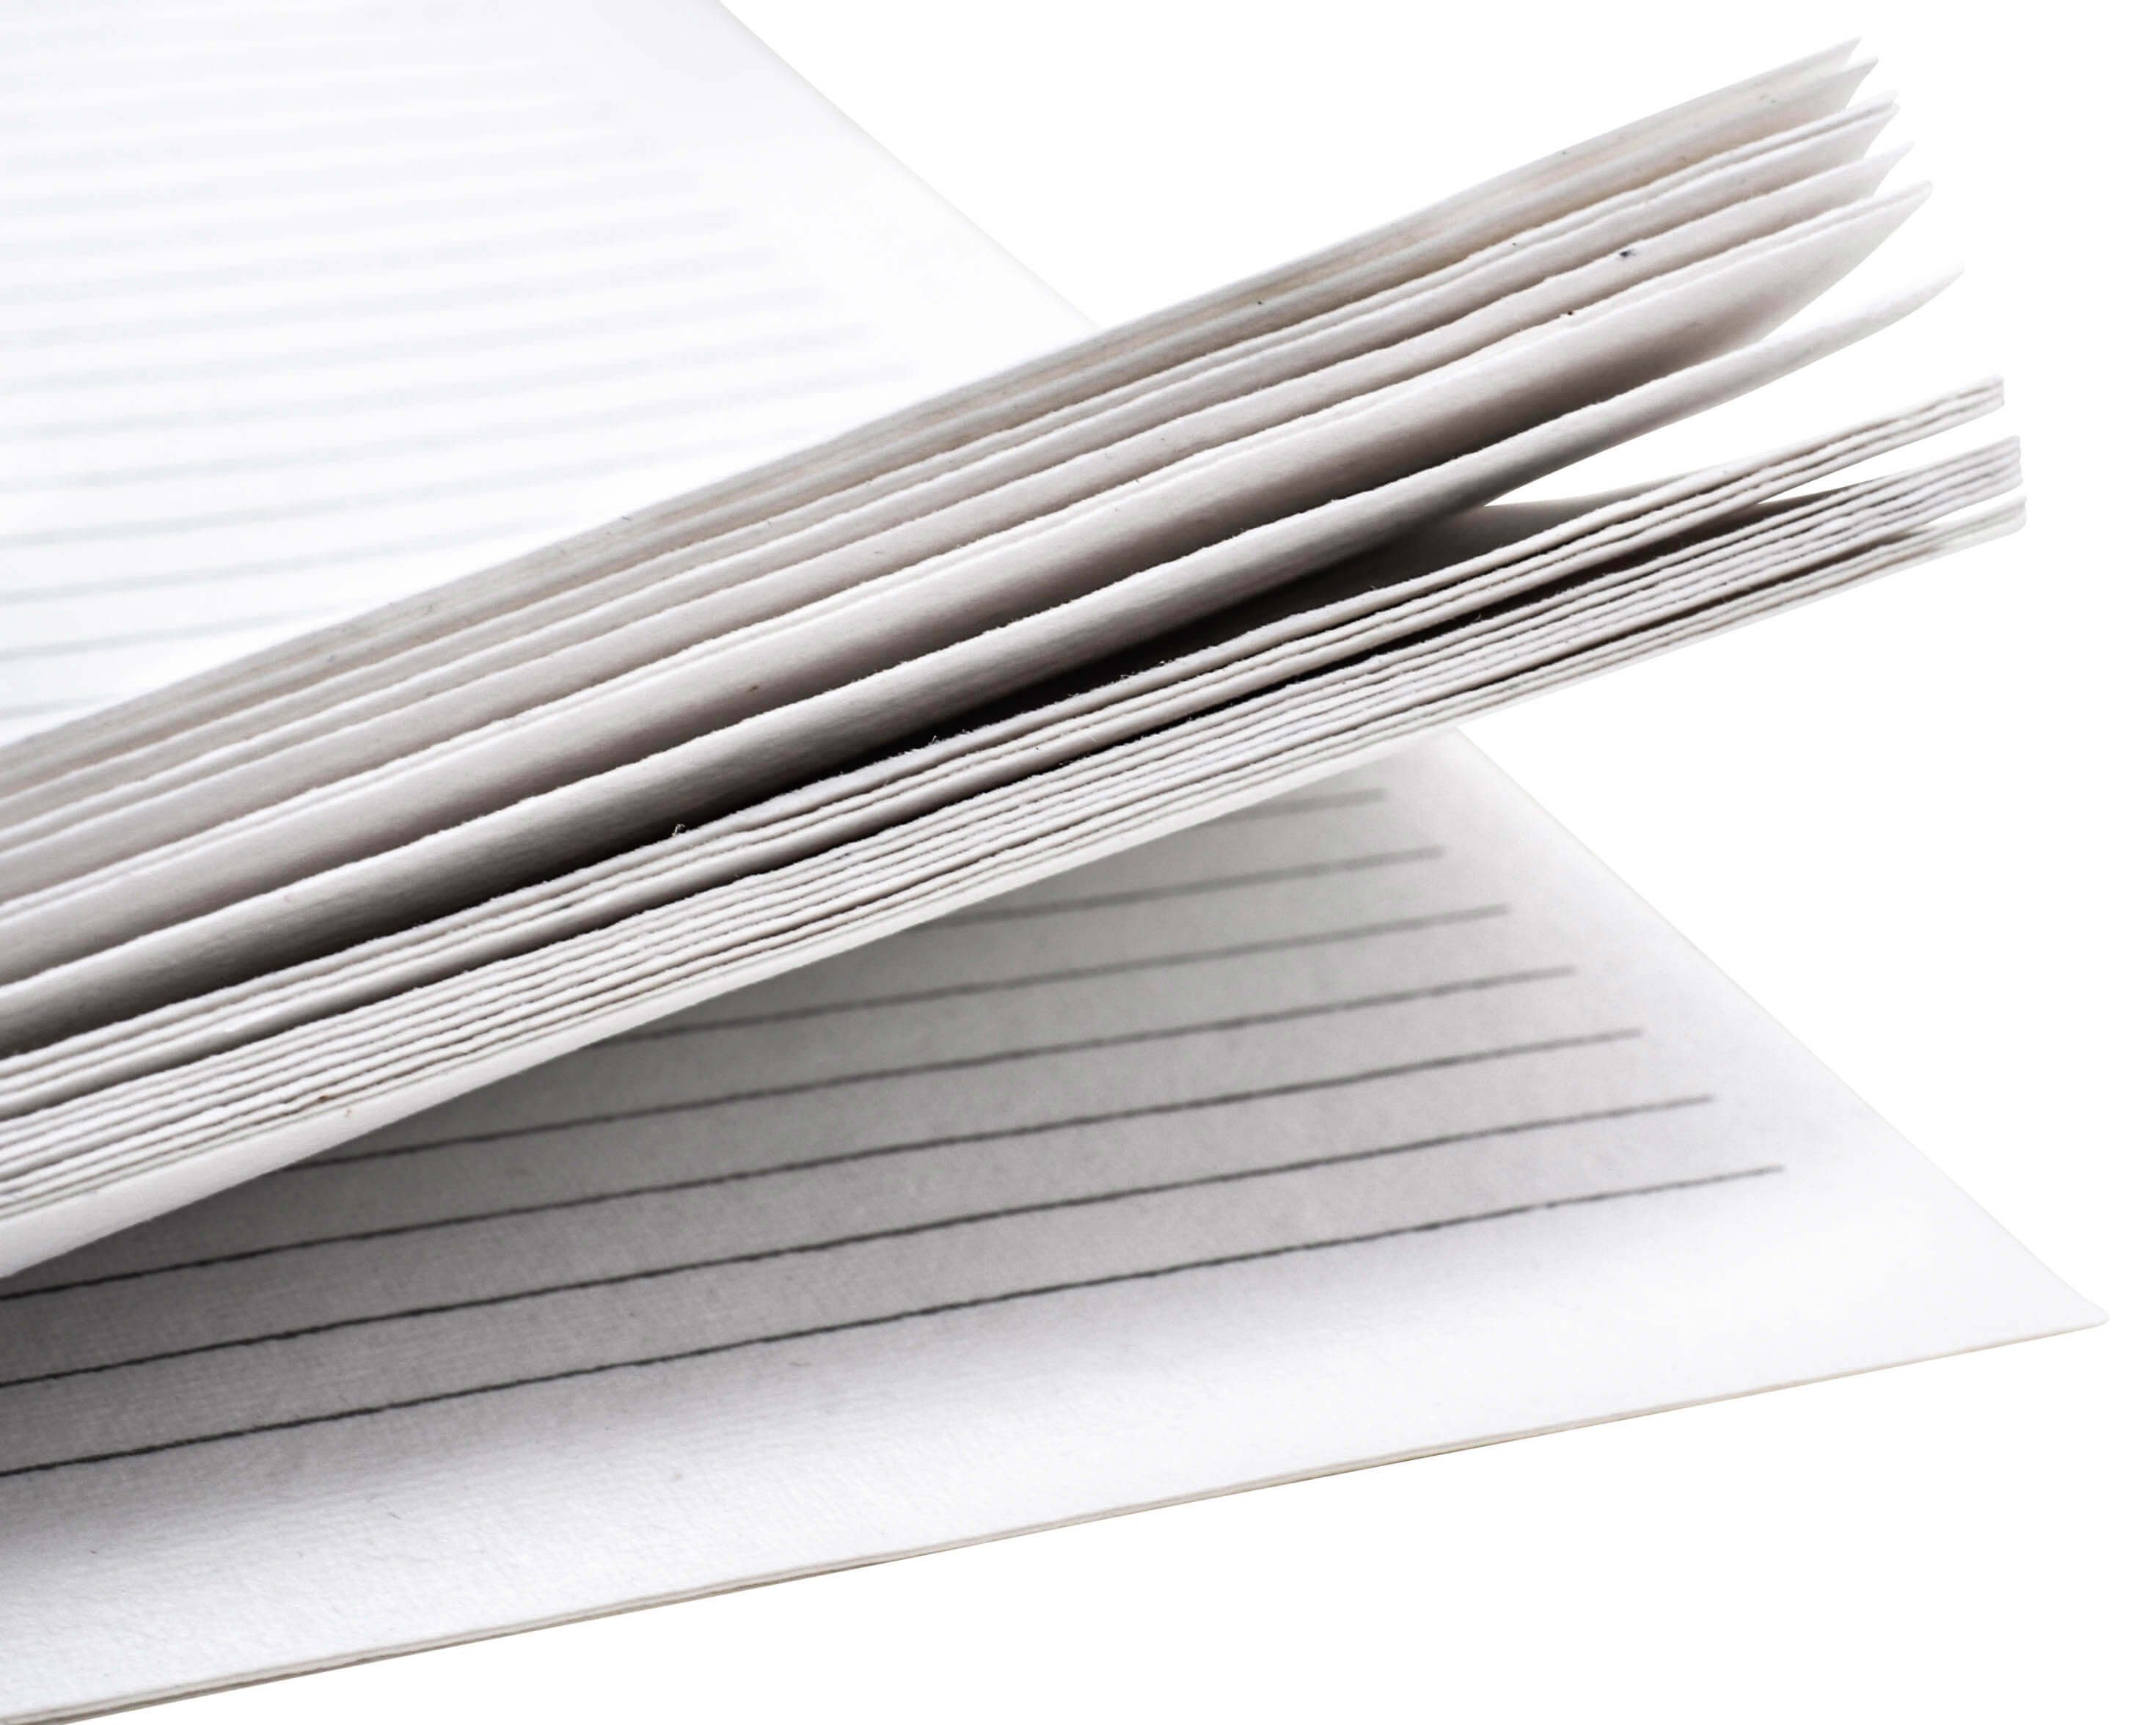 Gusti Leder Briefpapier Asterix, Bucheinlage Set Naturpapier Blanko (liniert) Naturpapier -Inlay Papier 5er DIN-A4 A4